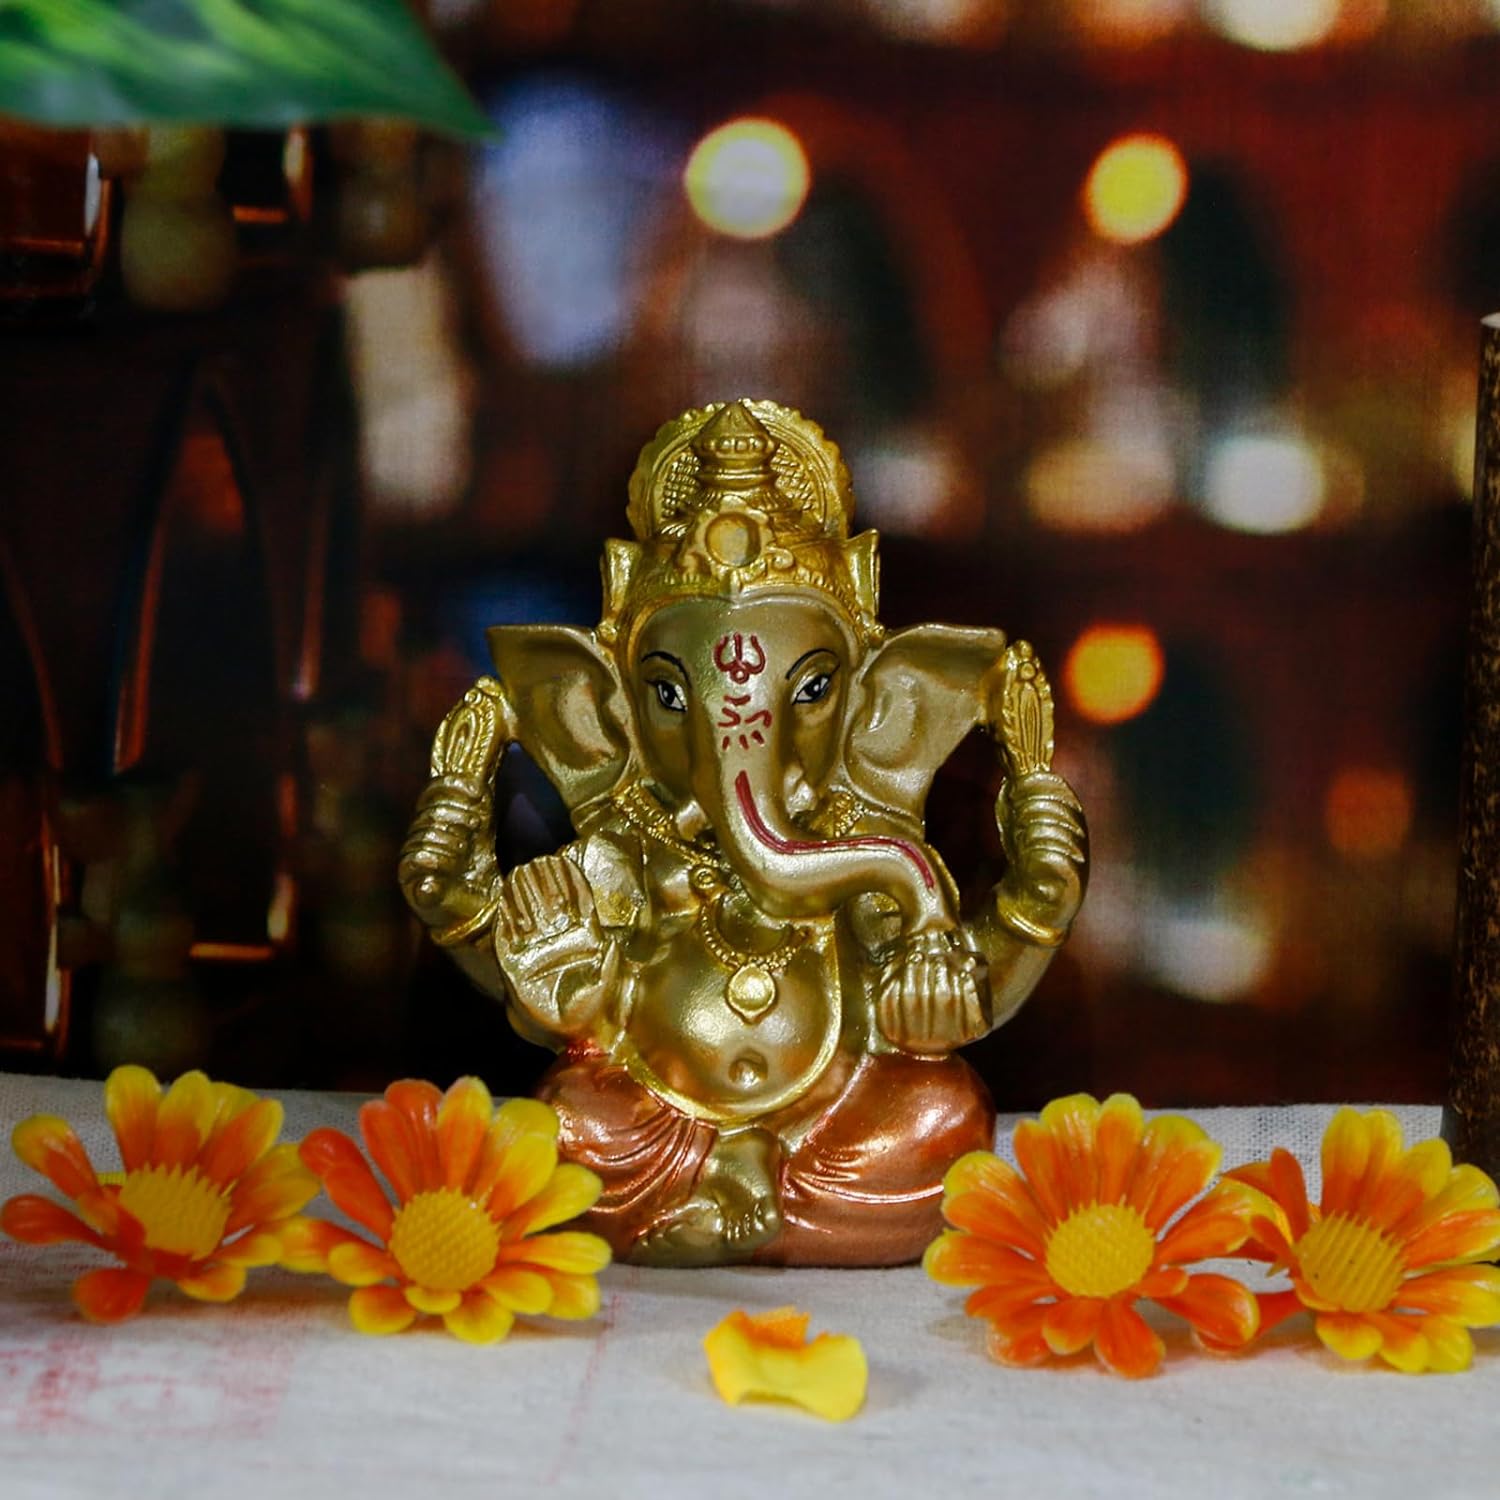 alikiki Hindu God Lord Ganesha Staue - India God Ganesh Idol for Car Dashboard Decor Birthday Gifts for Indian Man Women Home Mandir Temple Pooja Item Diwali Puja Gifts Yoga Room Altar Decor